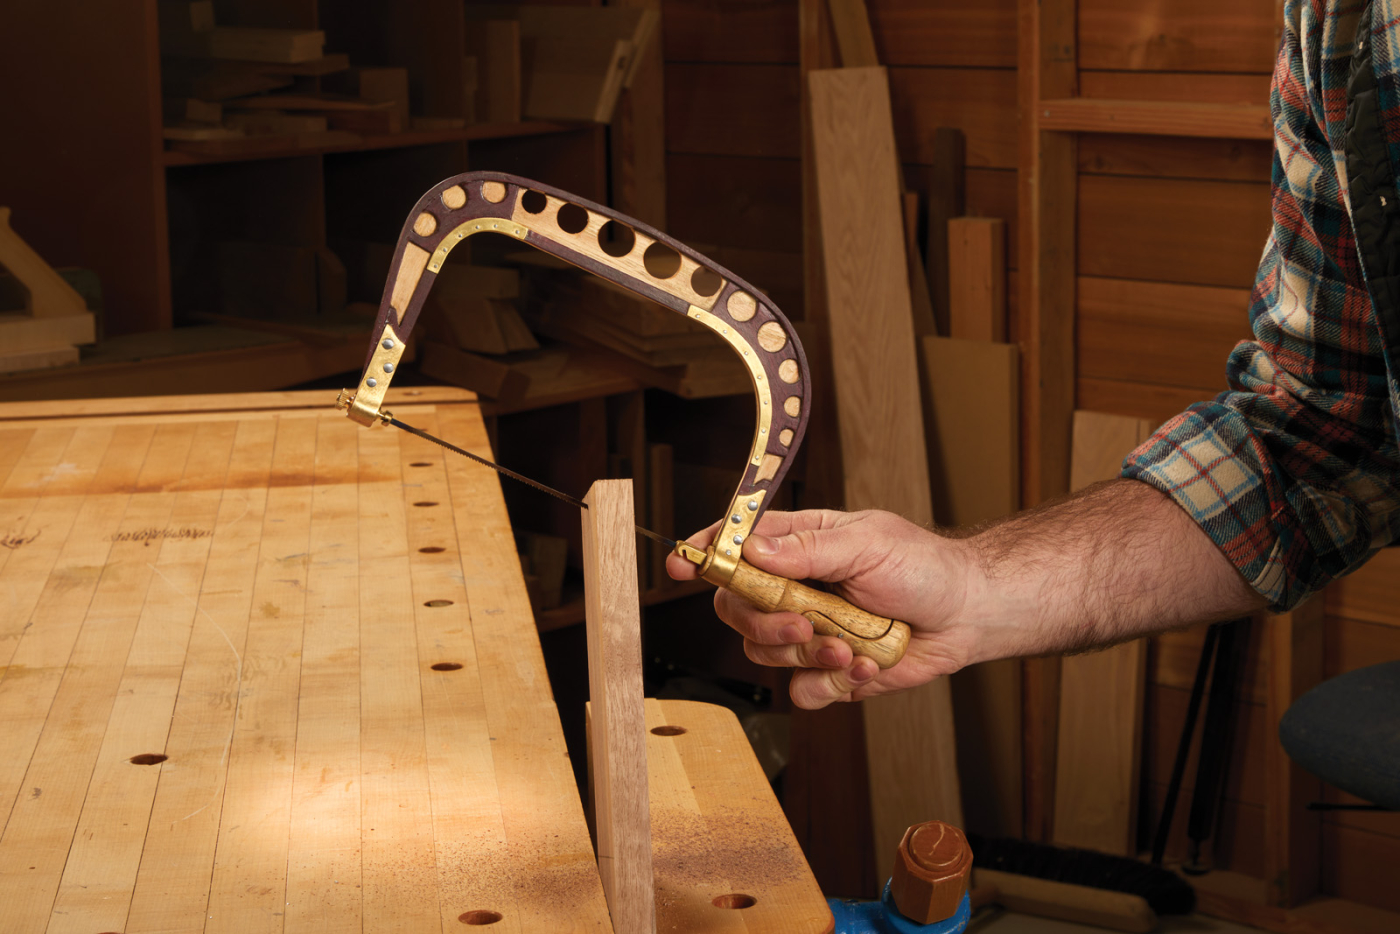 Magic Handsaw Set, 14 In 1 Multi Purpose Diy Bow Saw, Universal Hand Saw  Kit Toolbox Of Multi Blades Set Work As Hack Saw, Coping Saw, Bow Saw, Wood  Saw, Steel Saw (